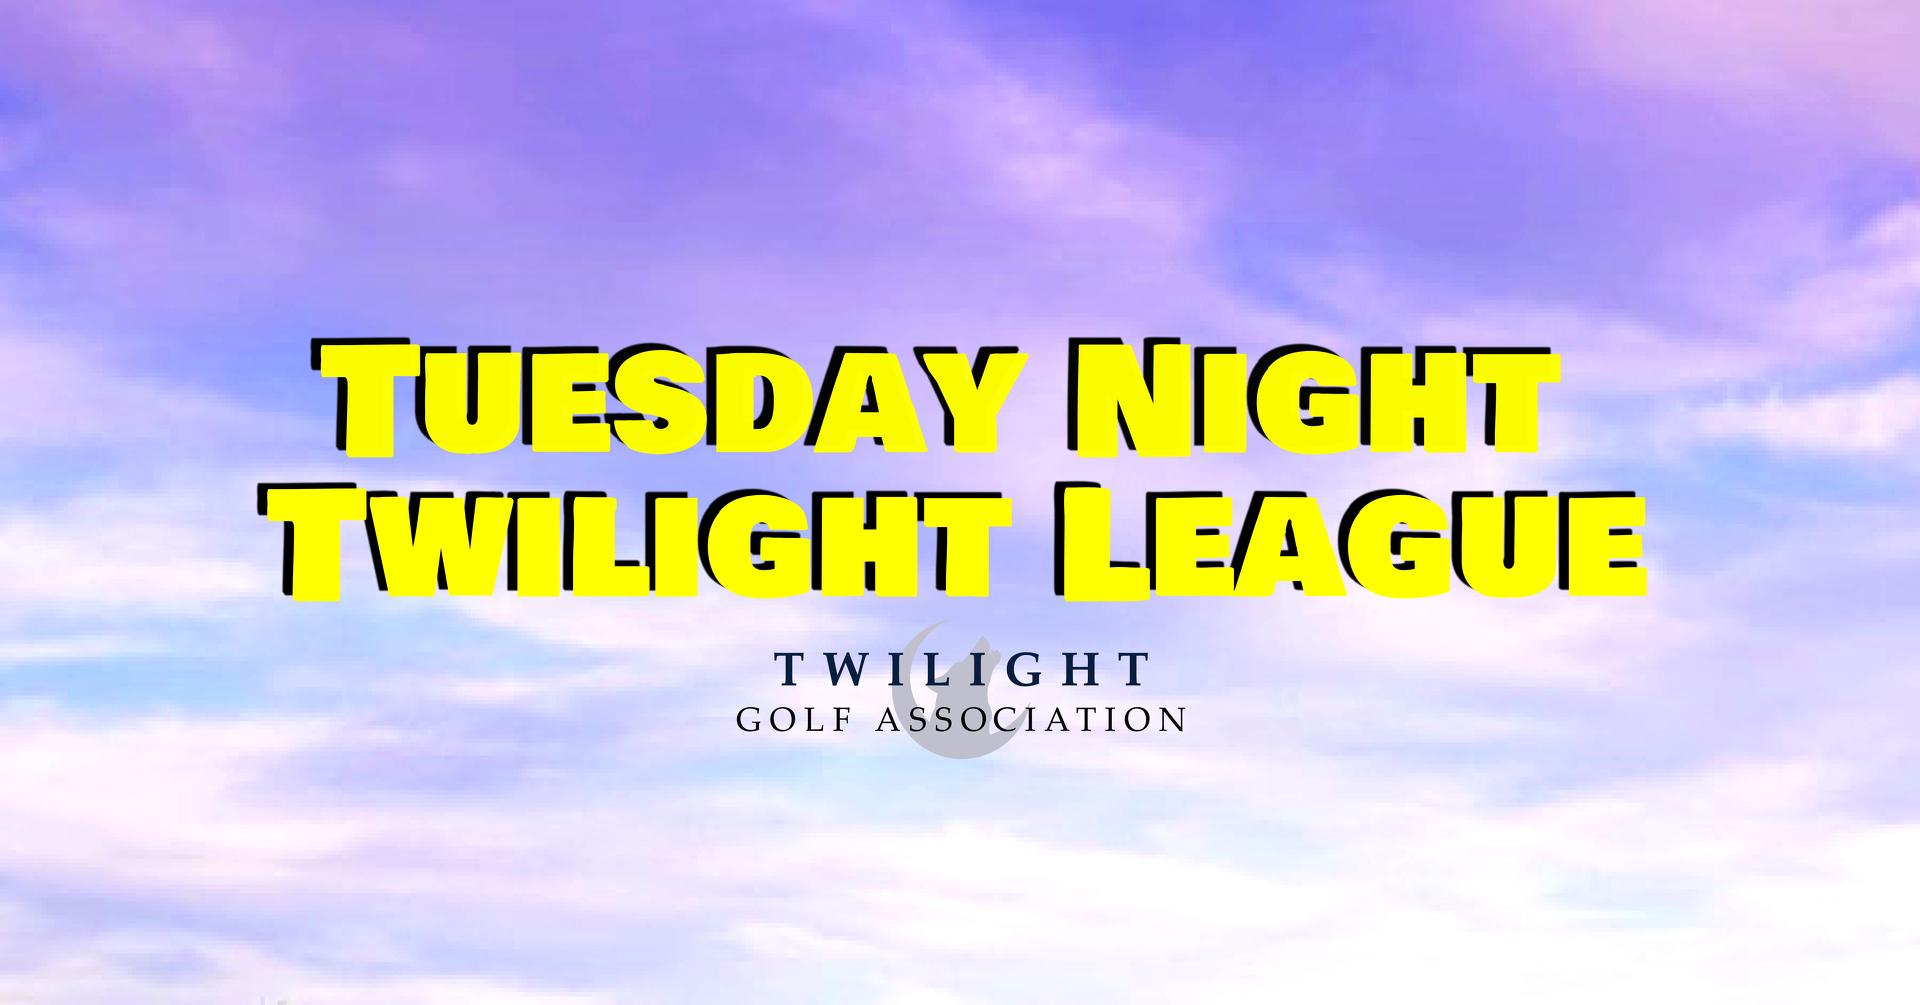 Tuesday Twilight League at Riverchase Golf Club